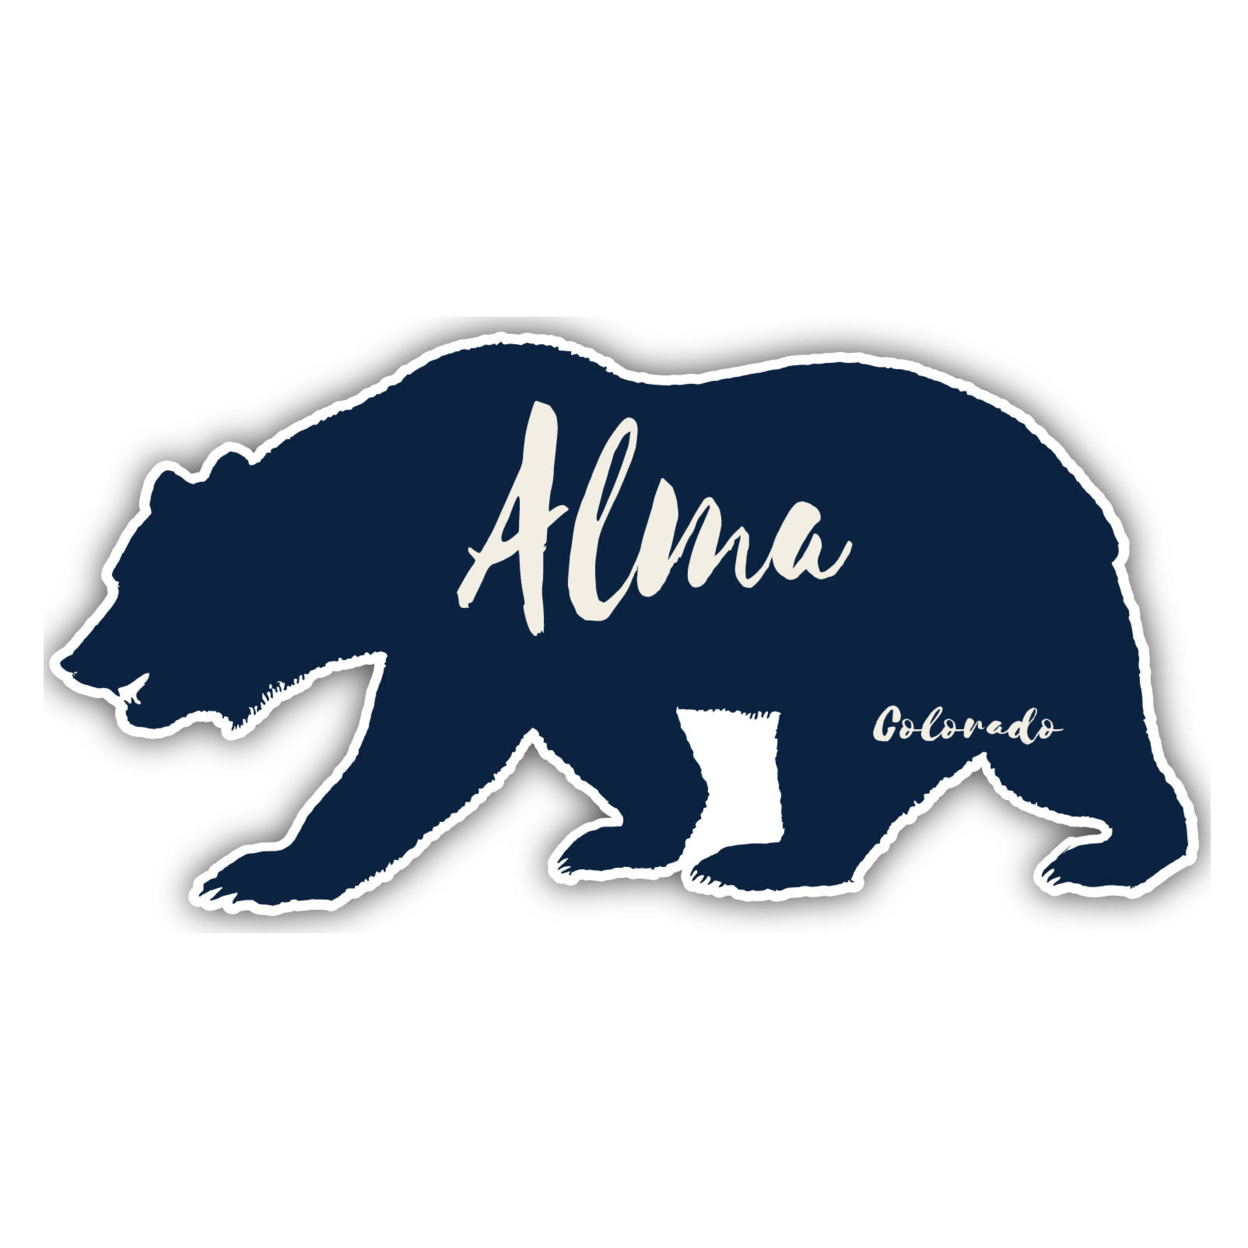 Alma Colorado Souvenir Decorative Stickers (Choose Theme And Size) - Single Unit, 12-Inch, Tent